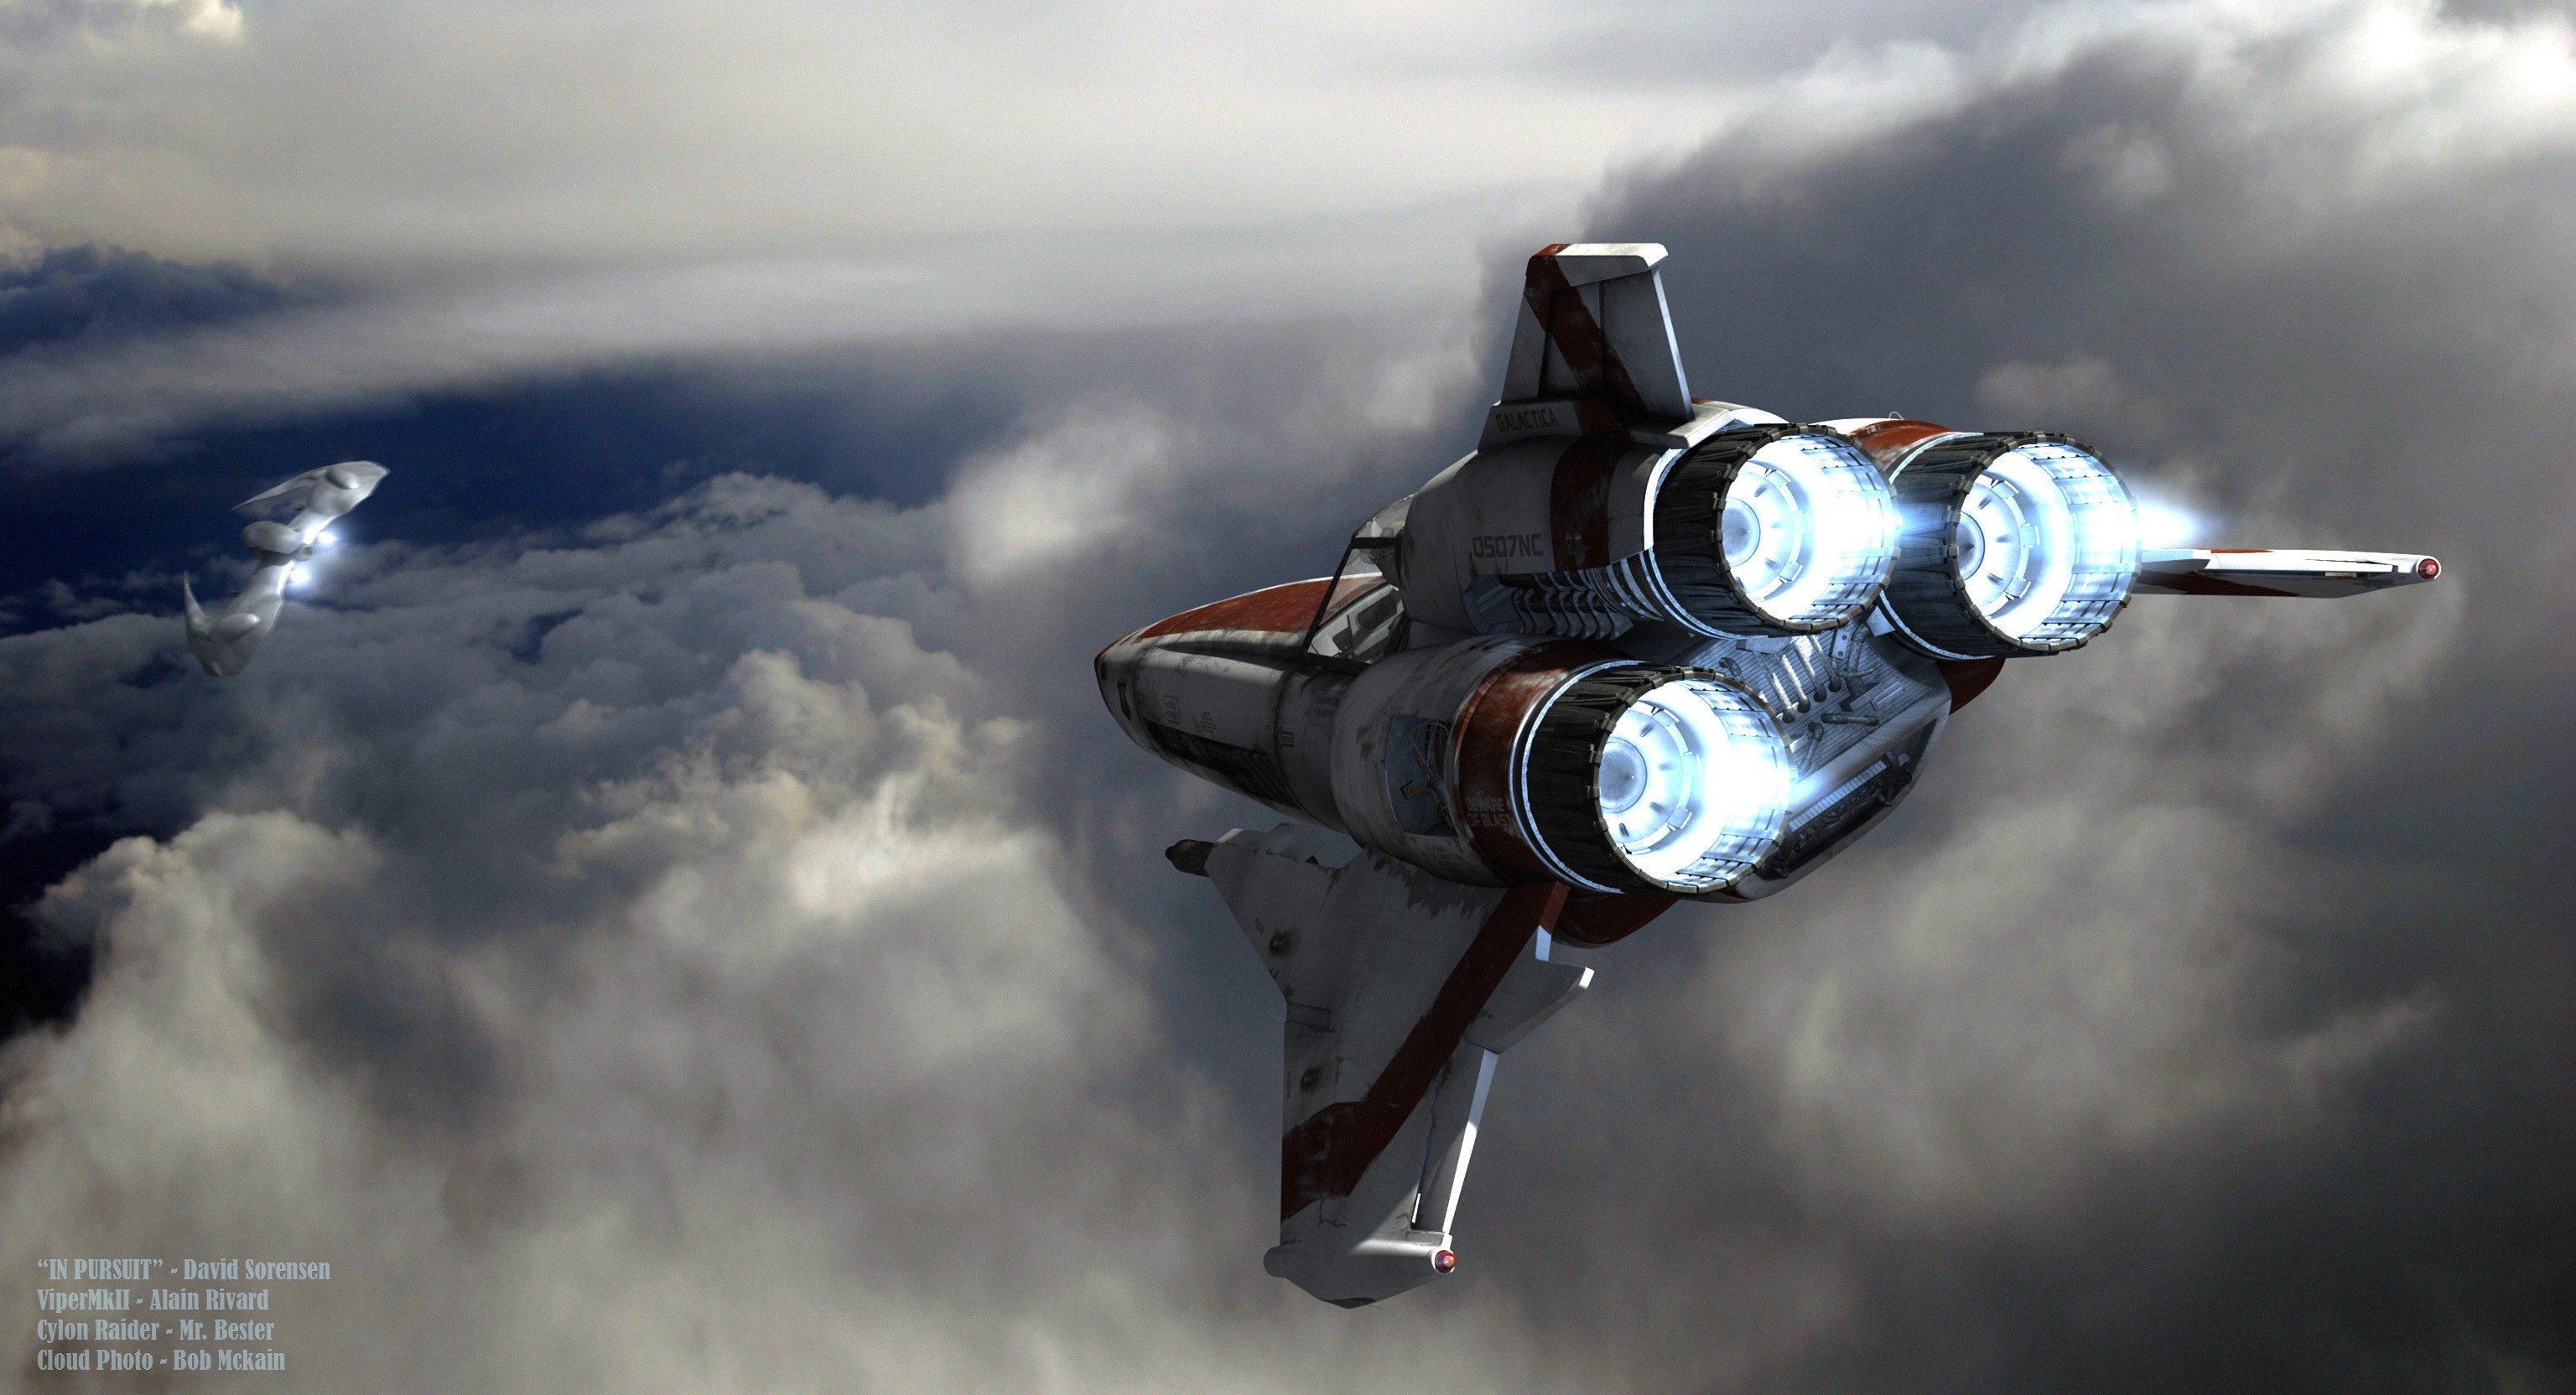 General 3072x1664 Battlestar Galactica spaceship digital art science fiction space Cylons futuristic clouds sky TV series vehicle